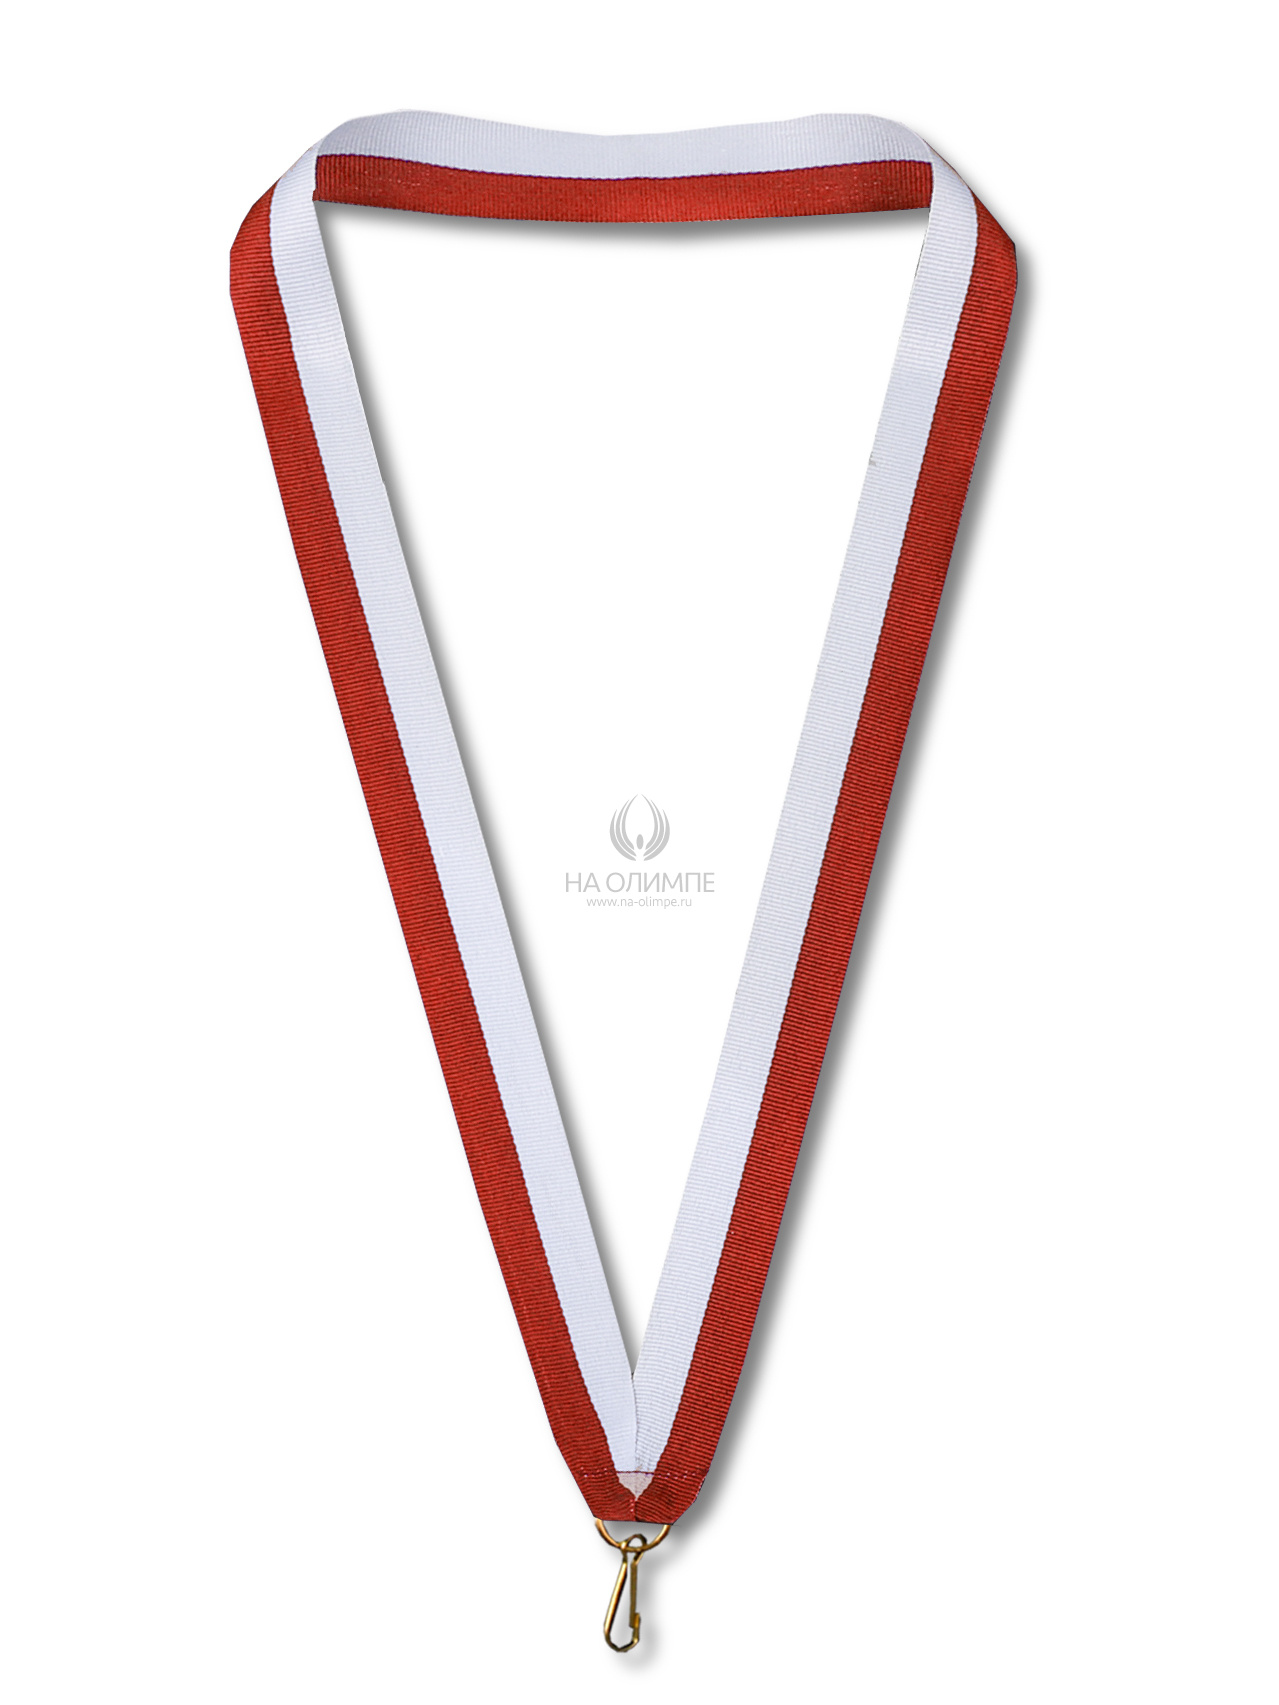 Лента для медали бело-красная 22мм, ширина ленты 22 мм